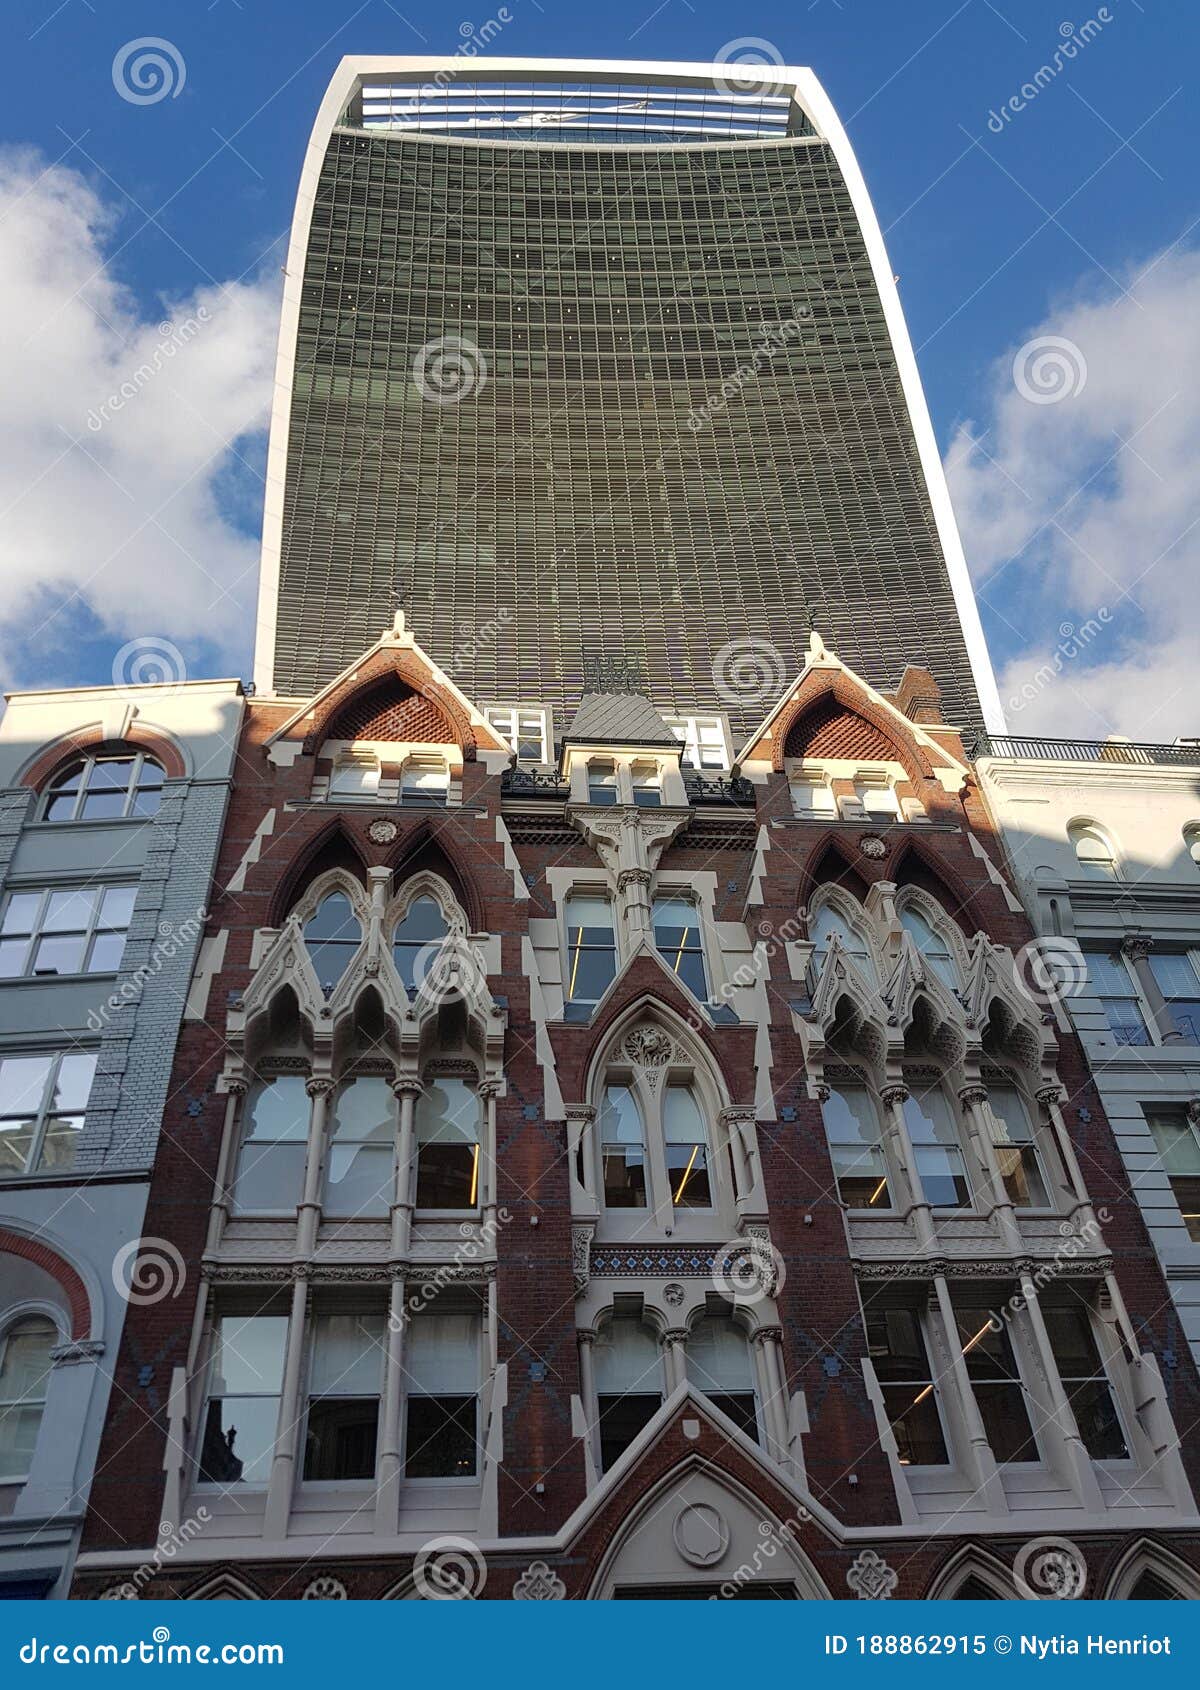 optical illusion, london tower versus church, londres